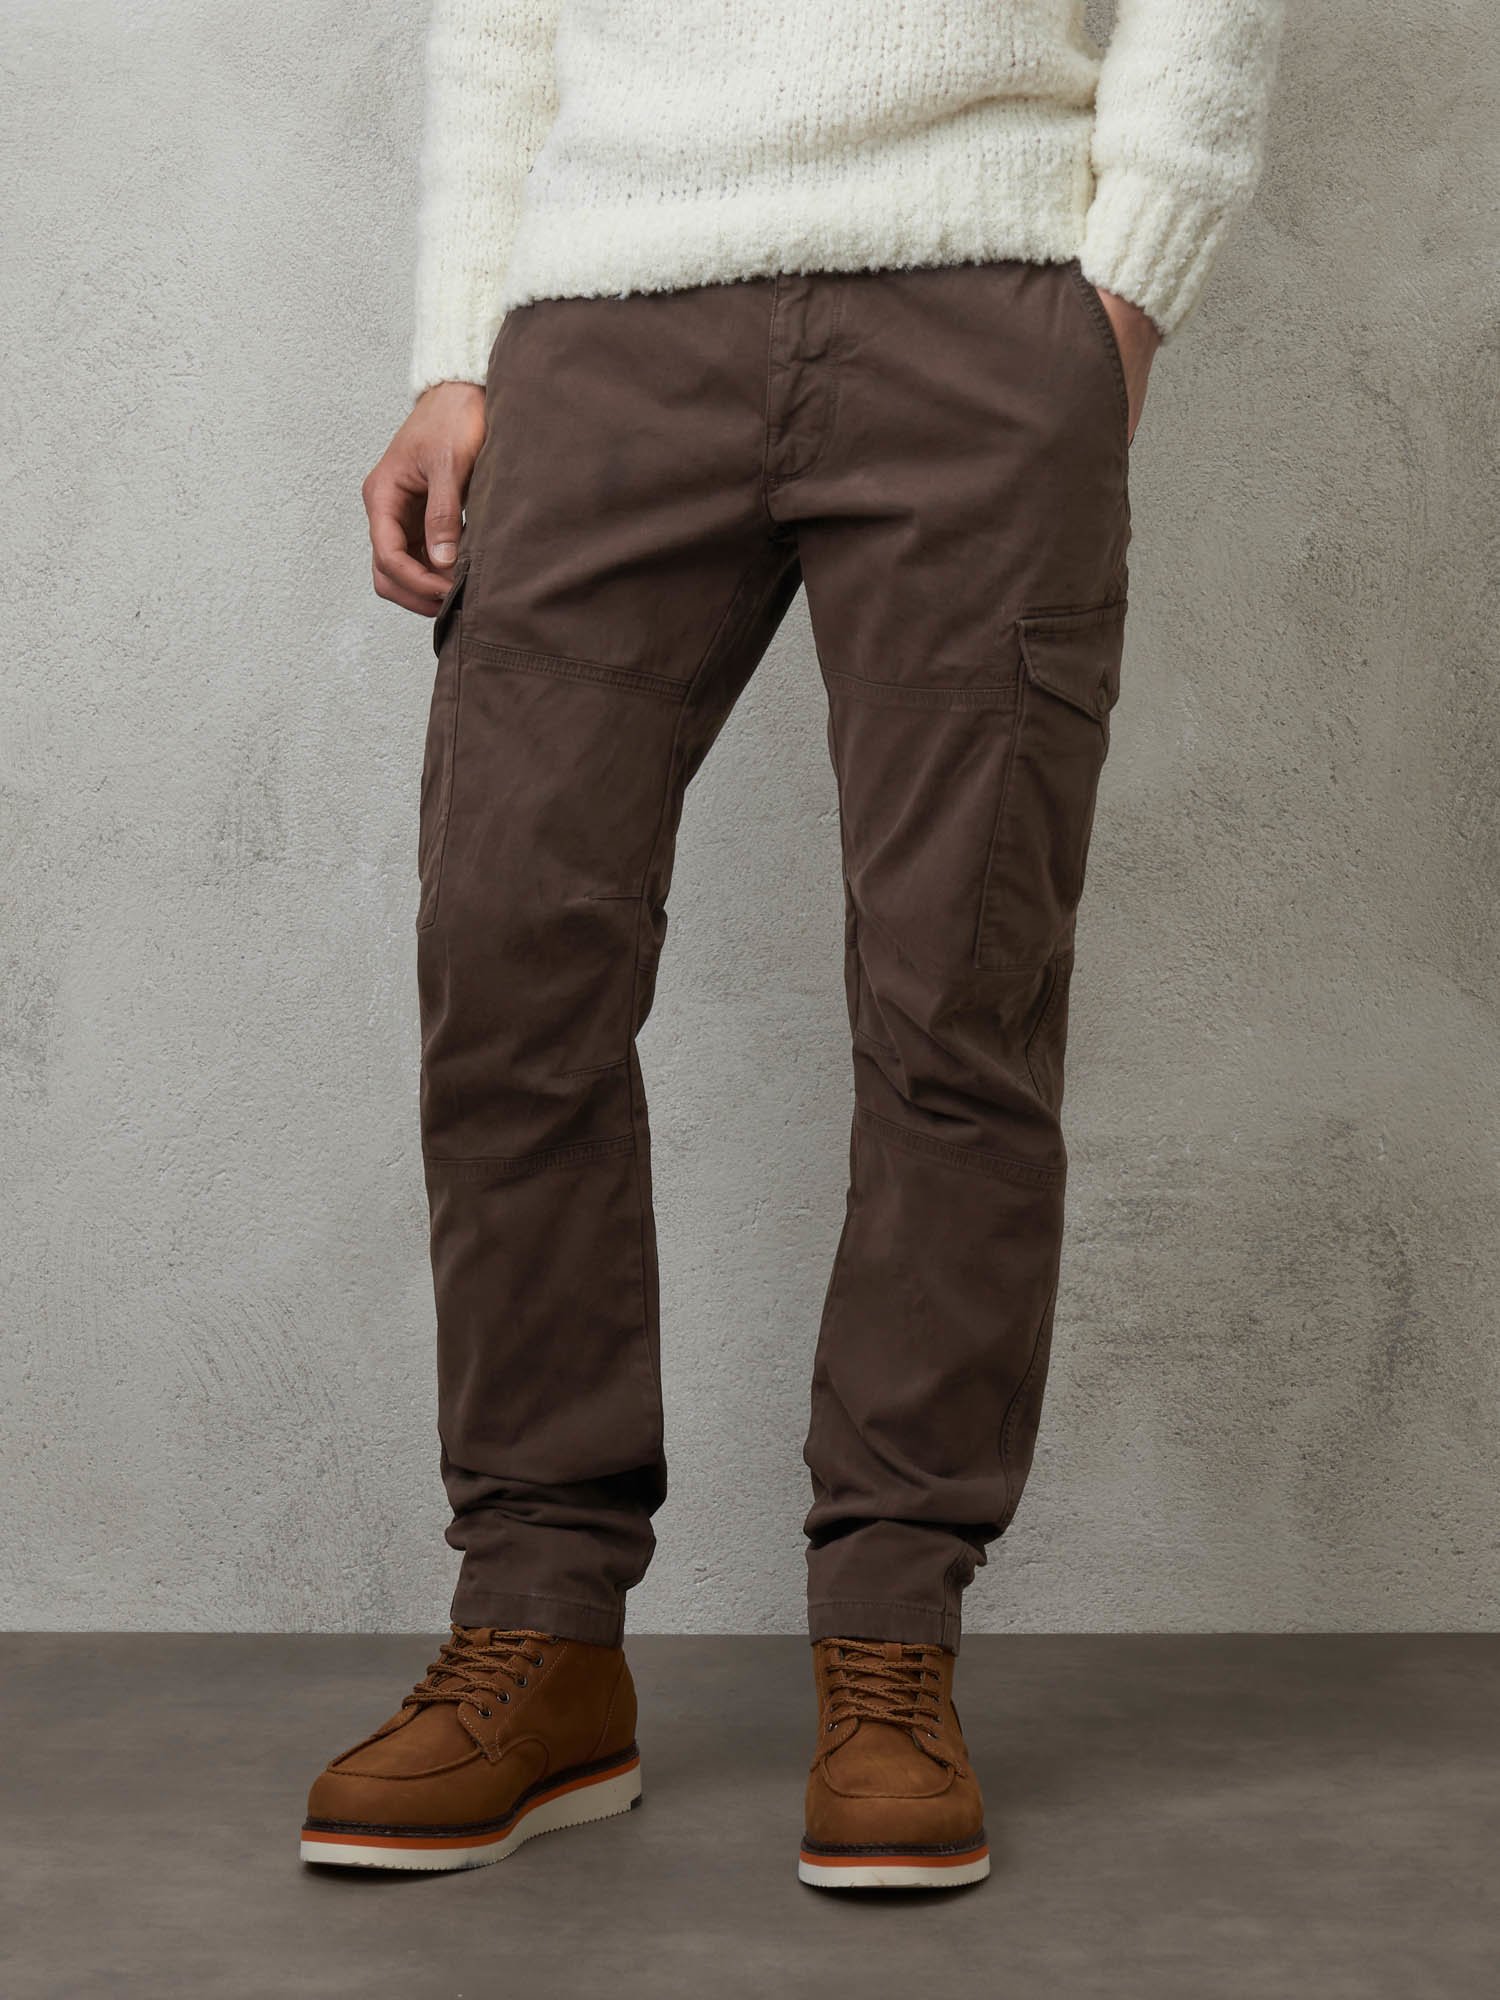 Solid Men Light Brown Cargo Pants, Regular Fit at Rs 410/piece in Meerut |  ID: 2851490729573